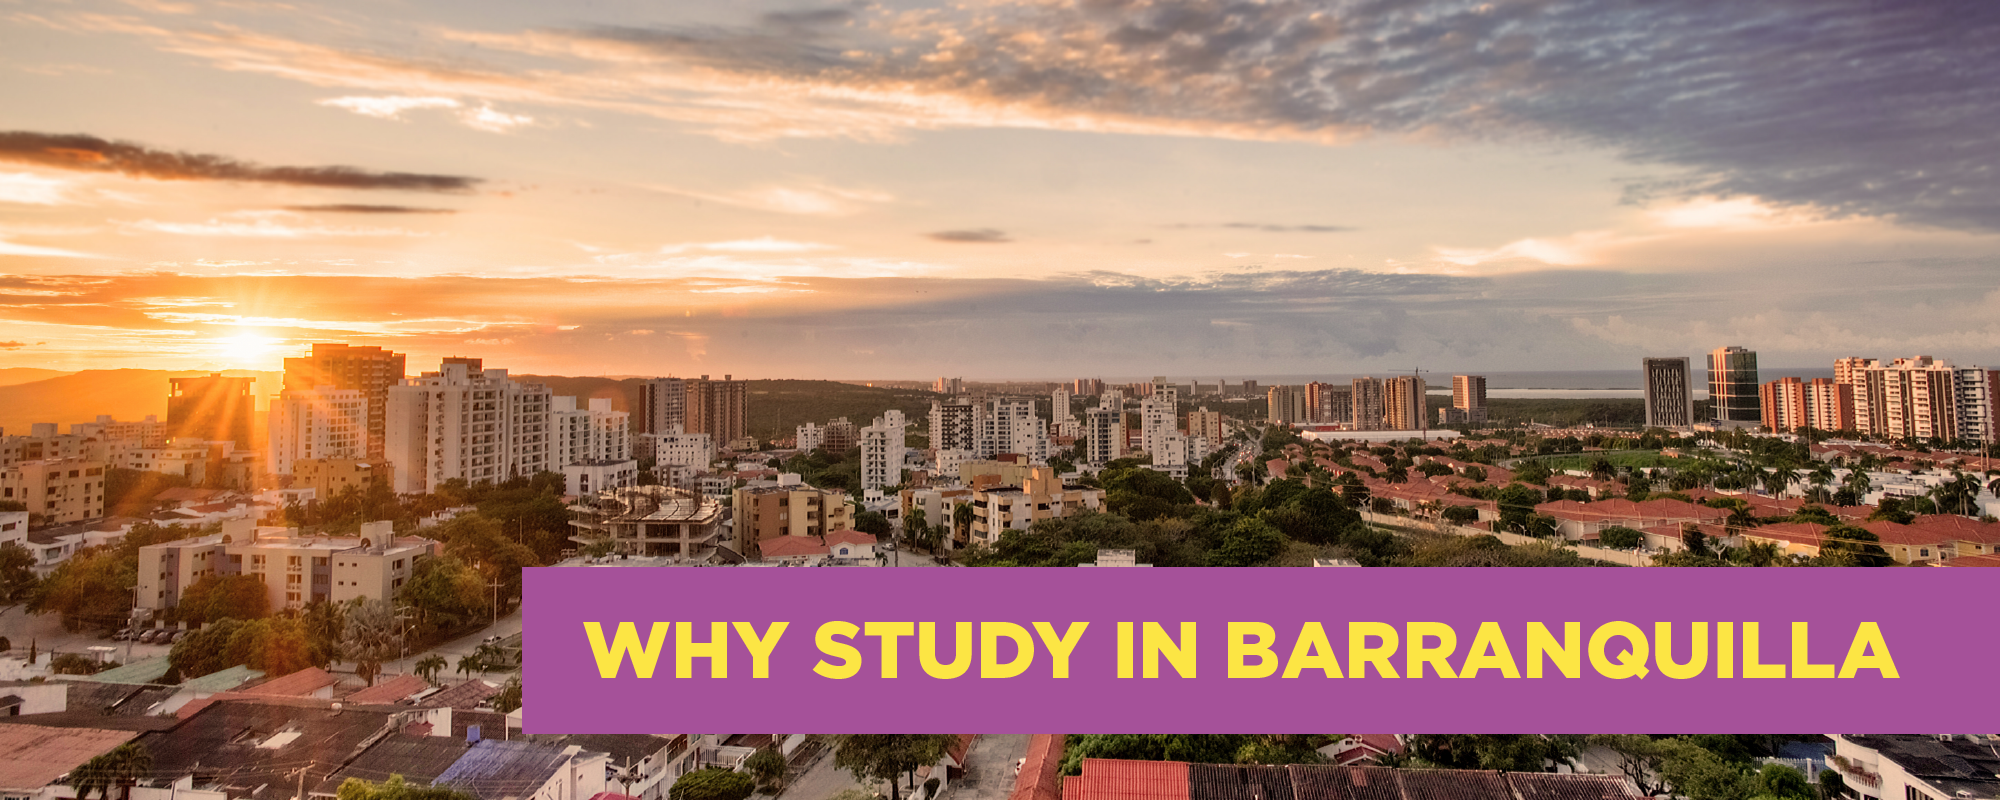 Banner why study in Barranquilla